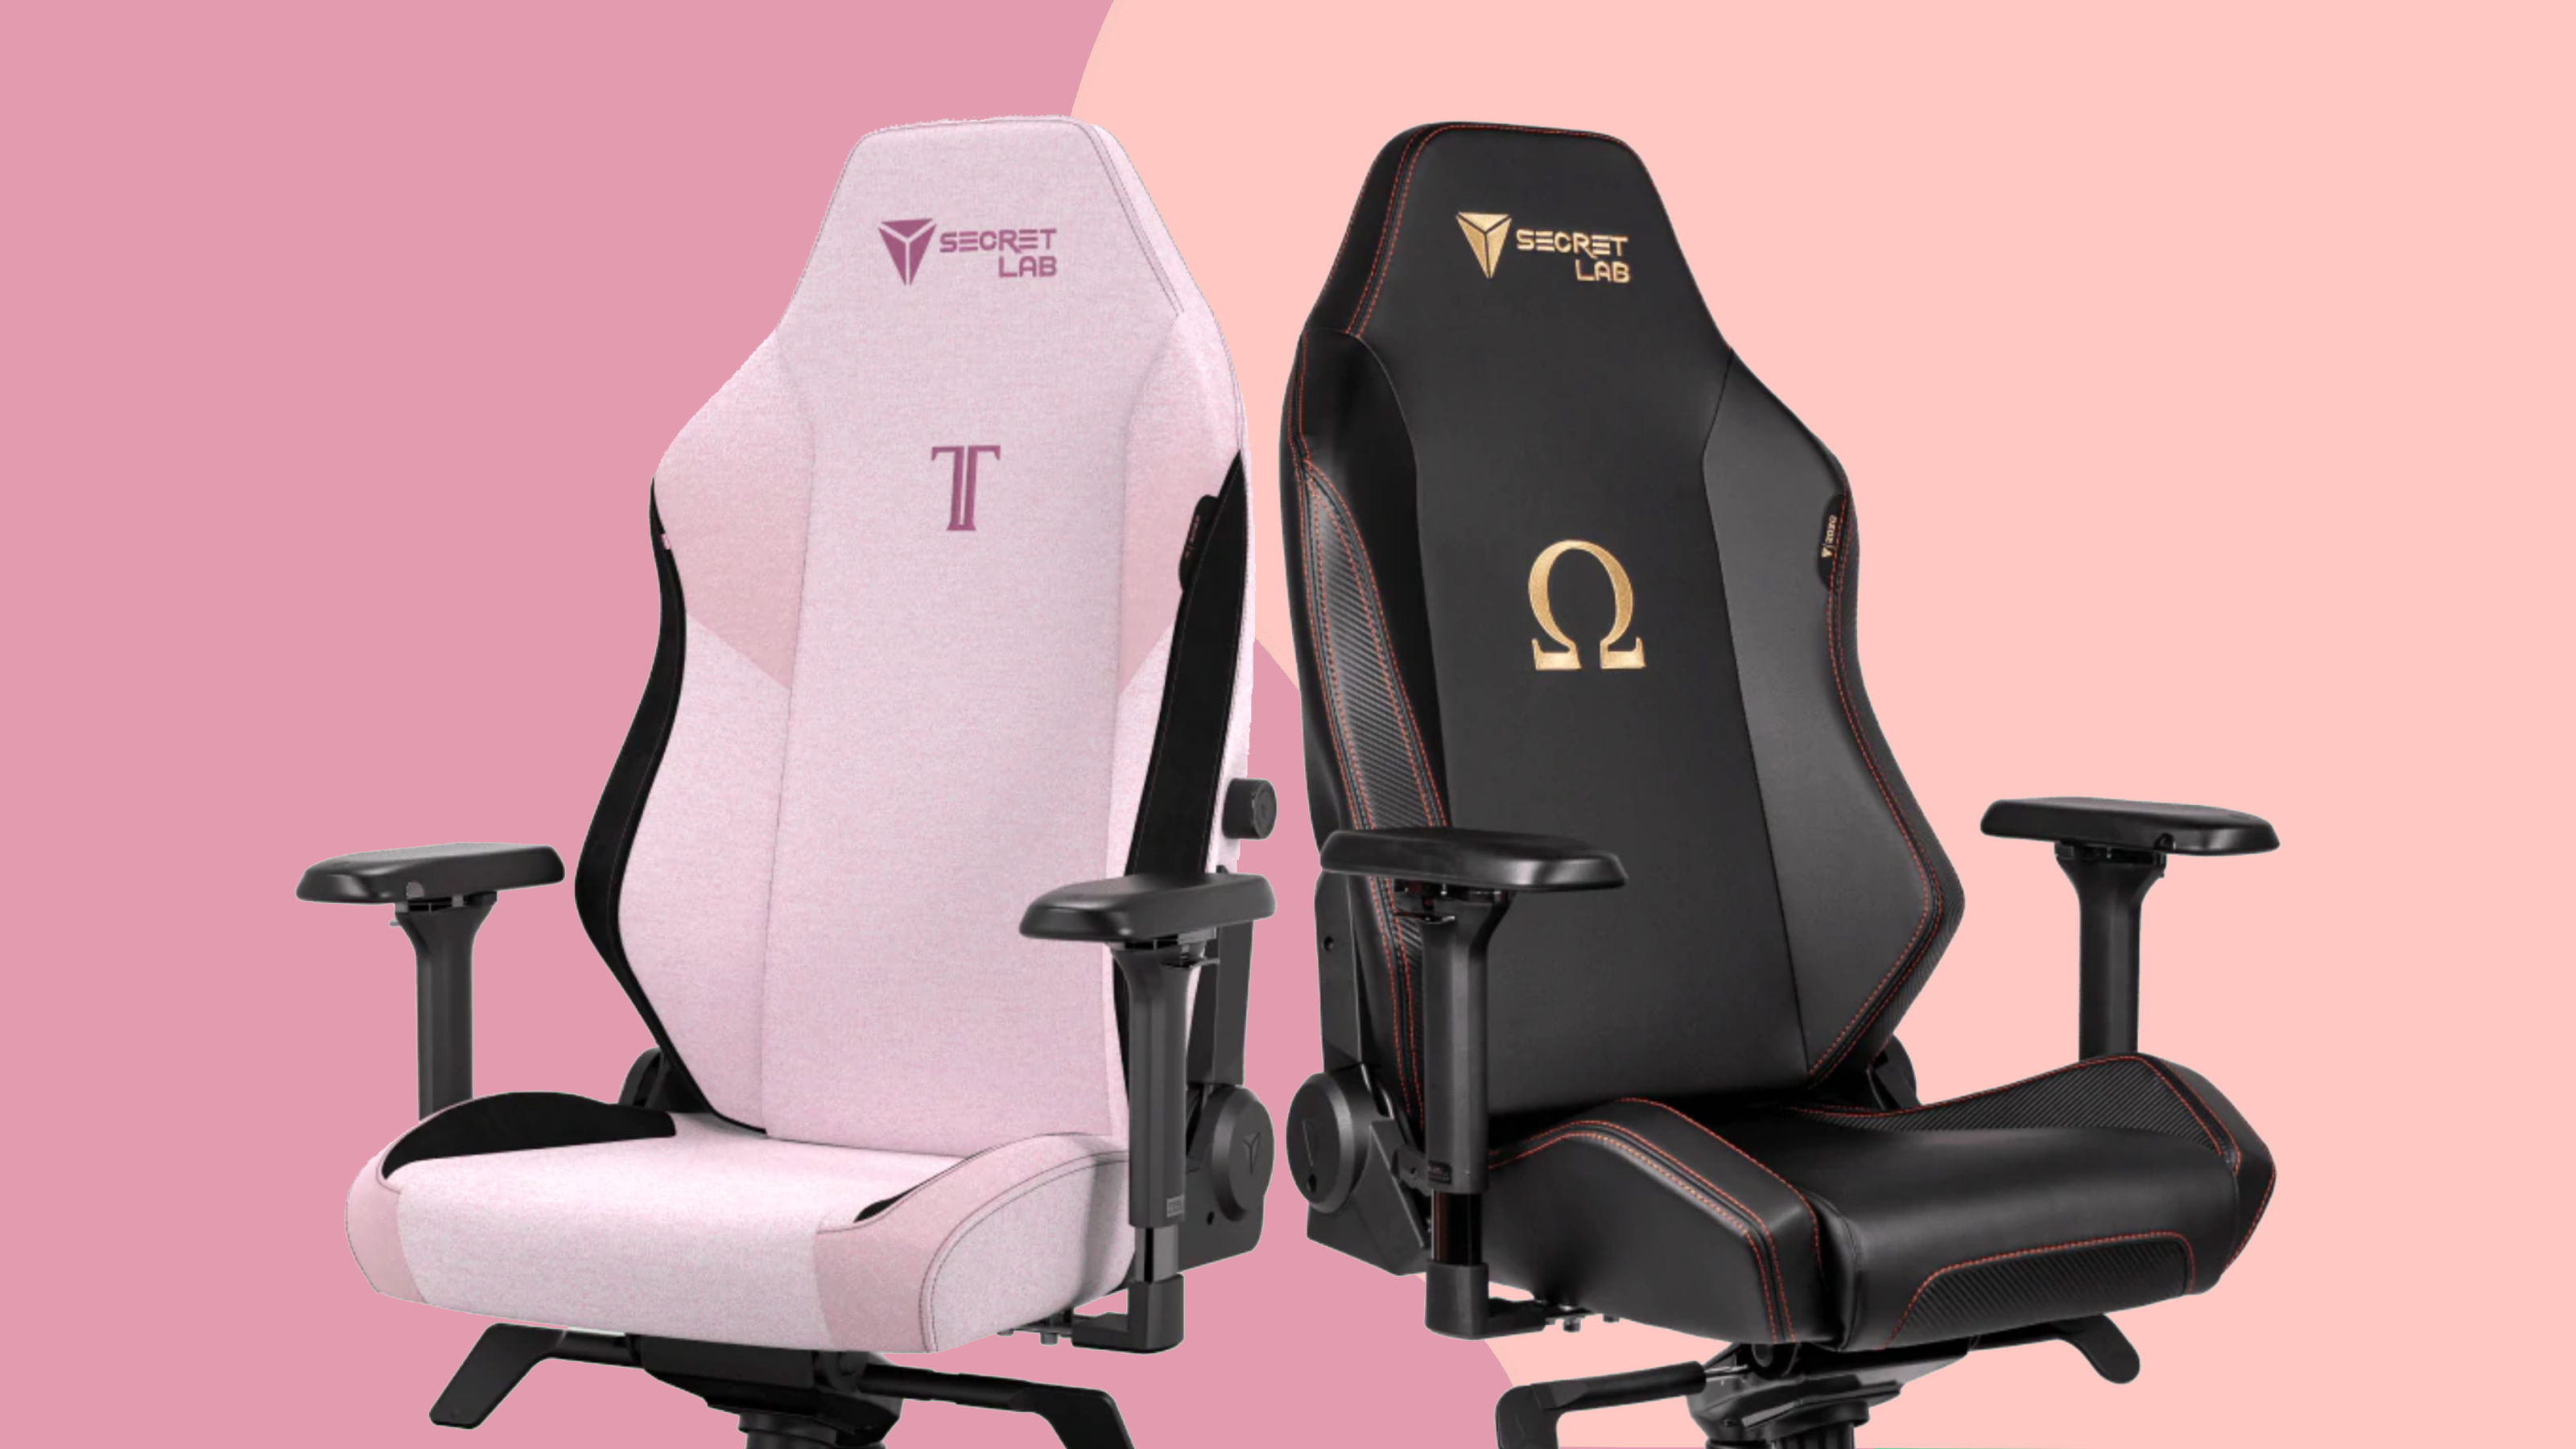 Luxury gaming. Secret Lab. Secret Lab Chair. Luxury Gaming Chairs. Gamelab Tetra кресло снизу.